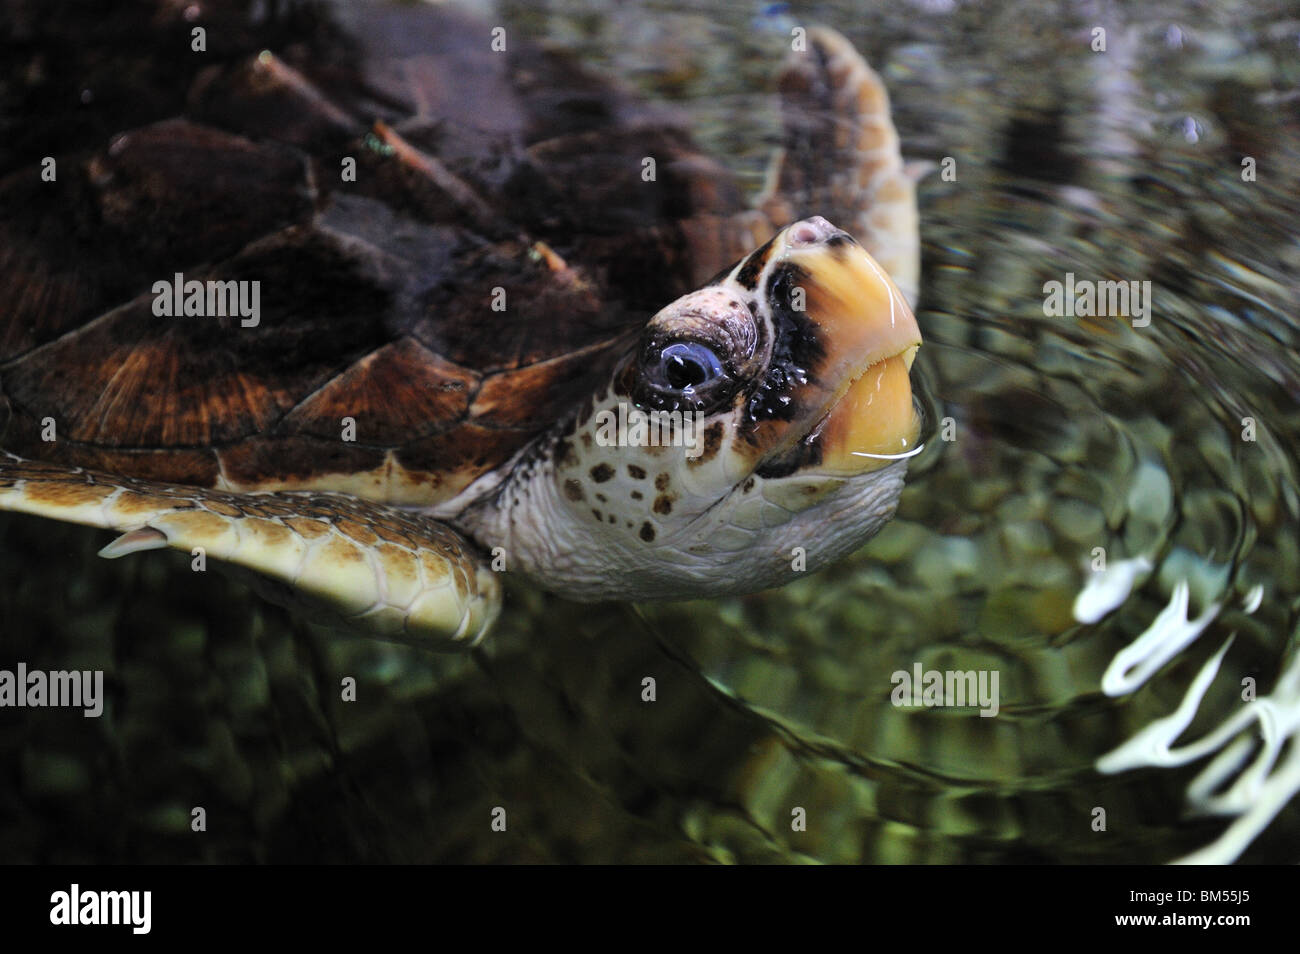 Tortugas marinas Hawskbill, Eretmochelys imbricata, Florida, cautiva Foto de stock